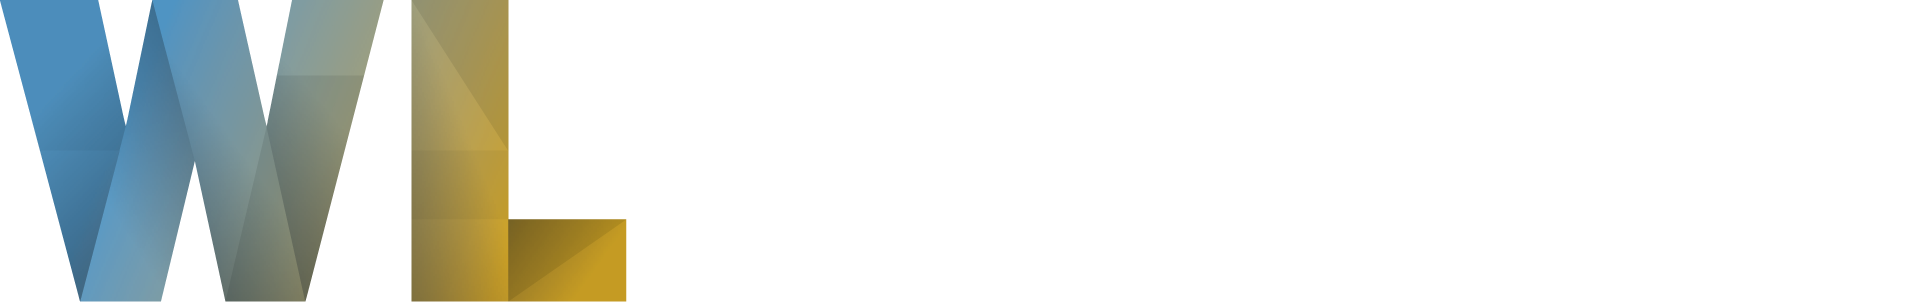 WL-moves-logo-reverse